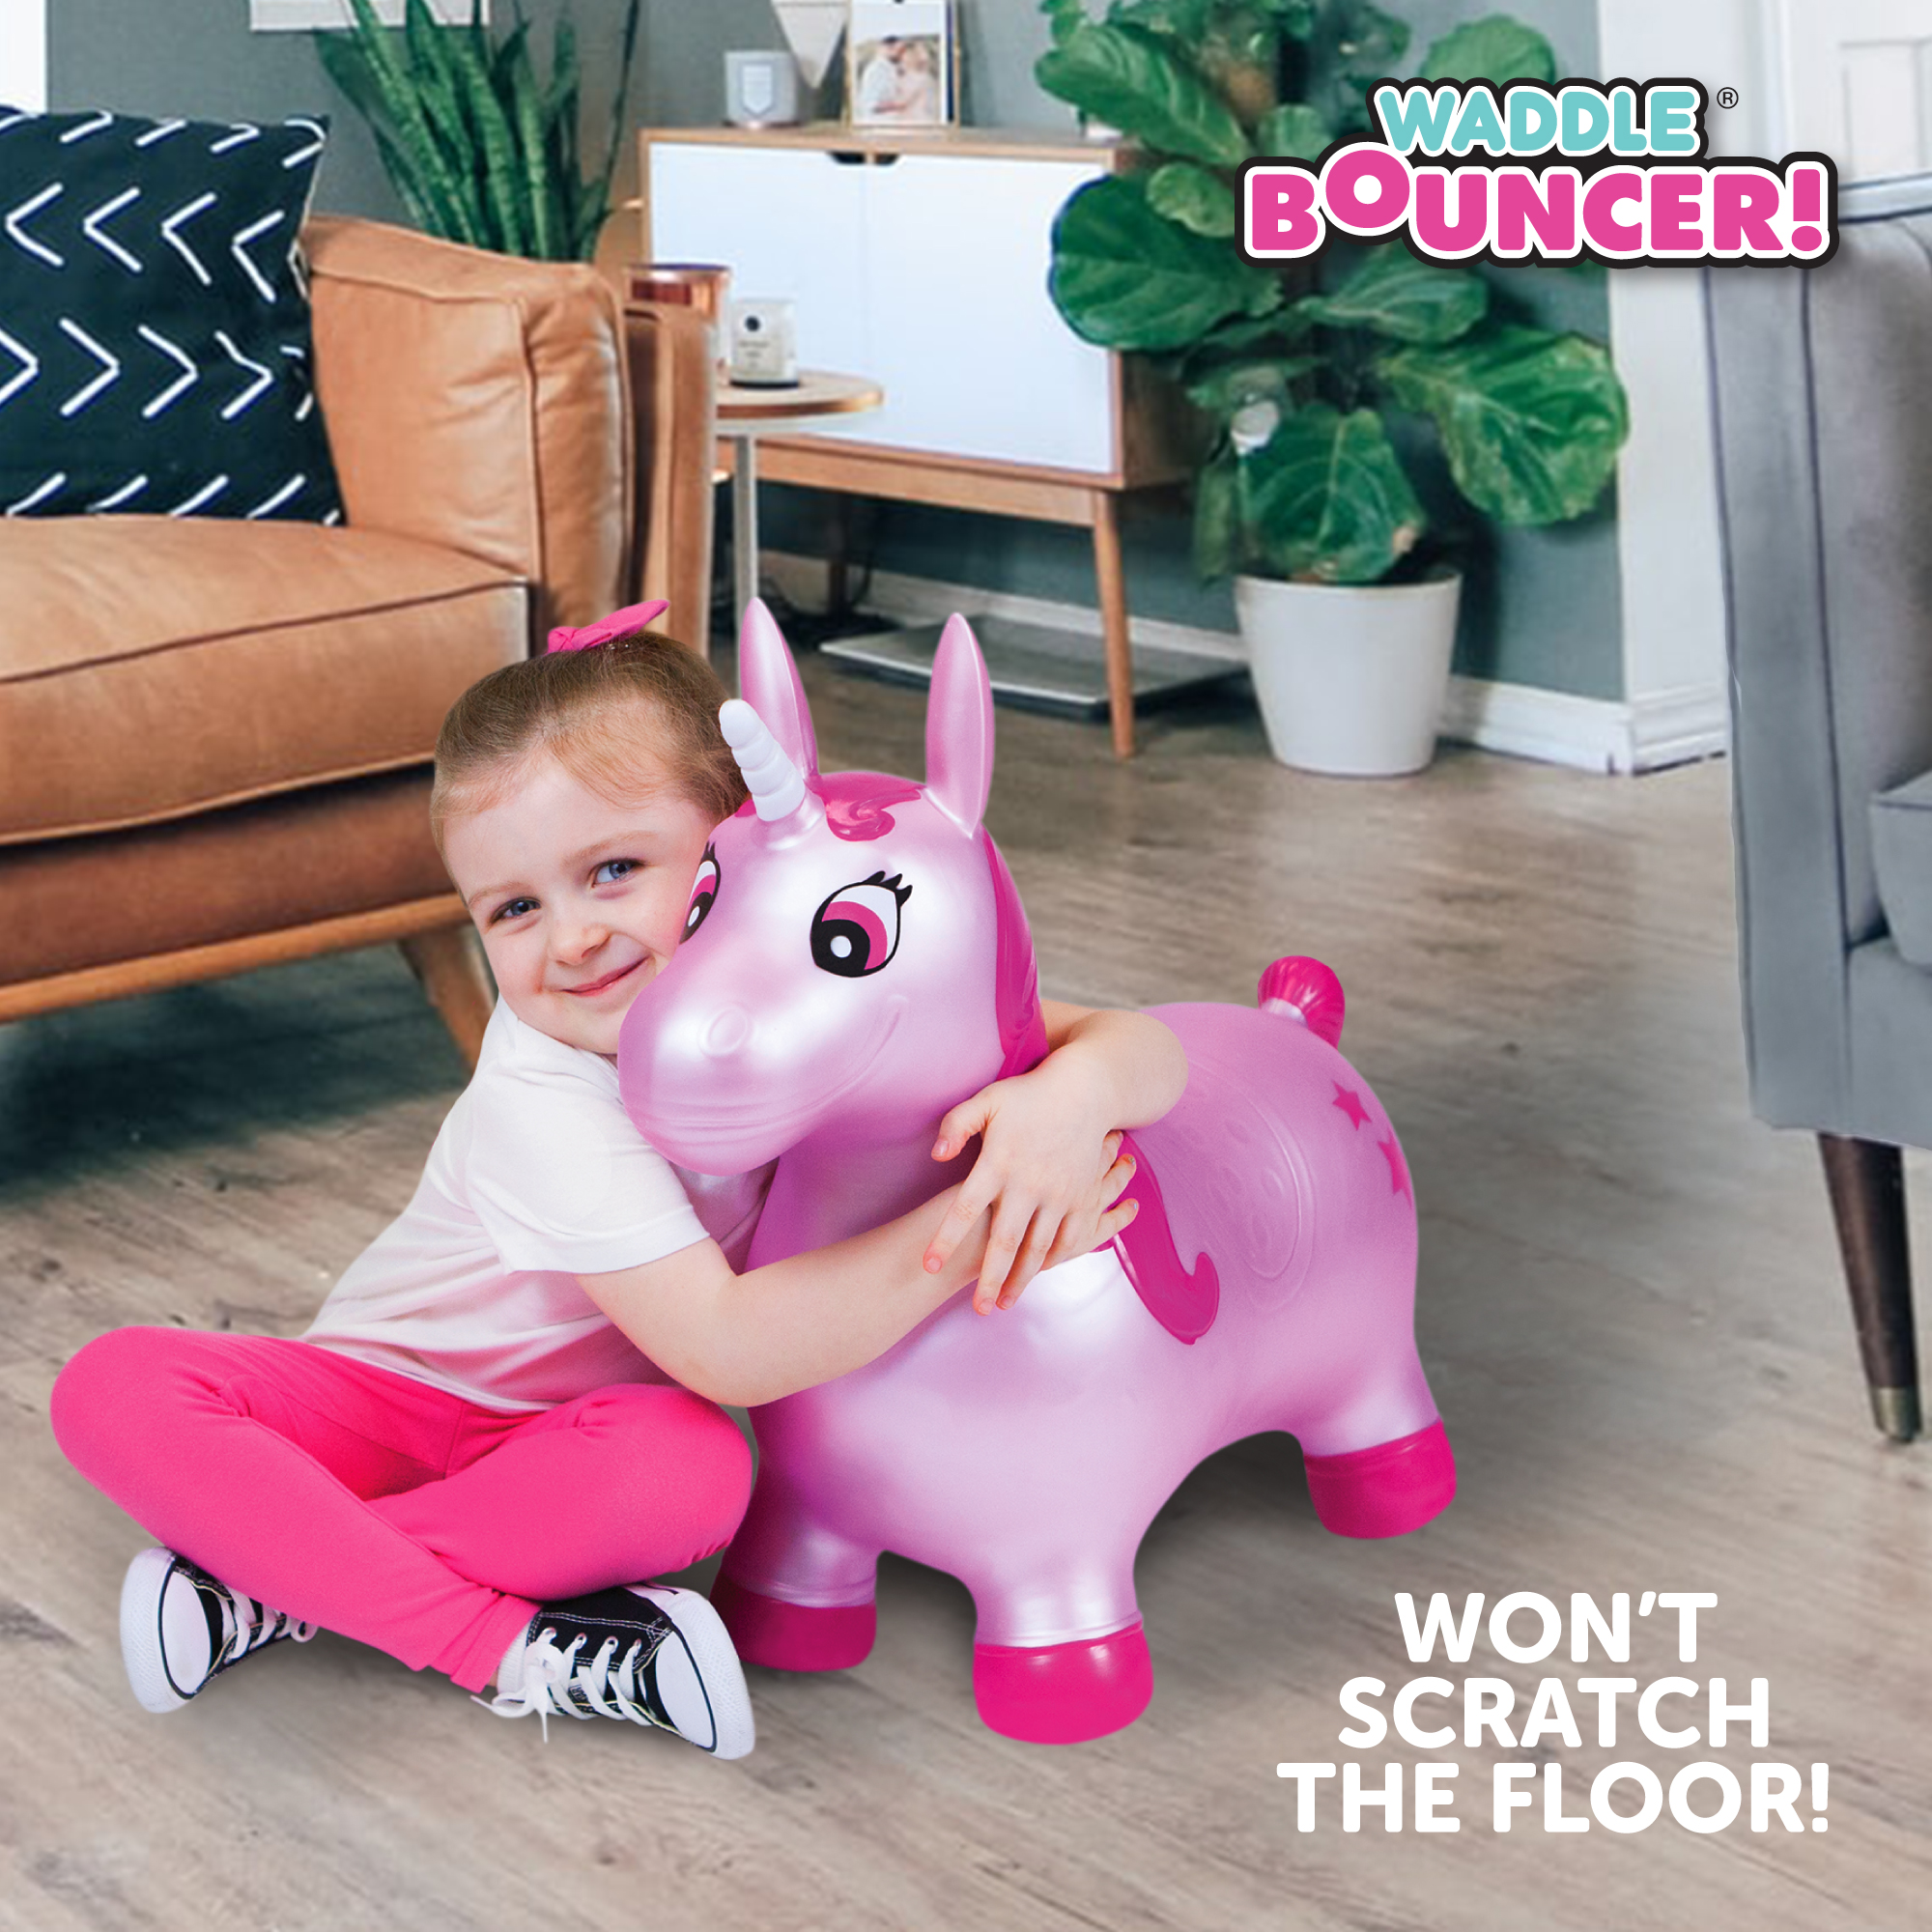 Waddle Pink Unicorn Inflatable Bouncer Ride on - image 2 of 7